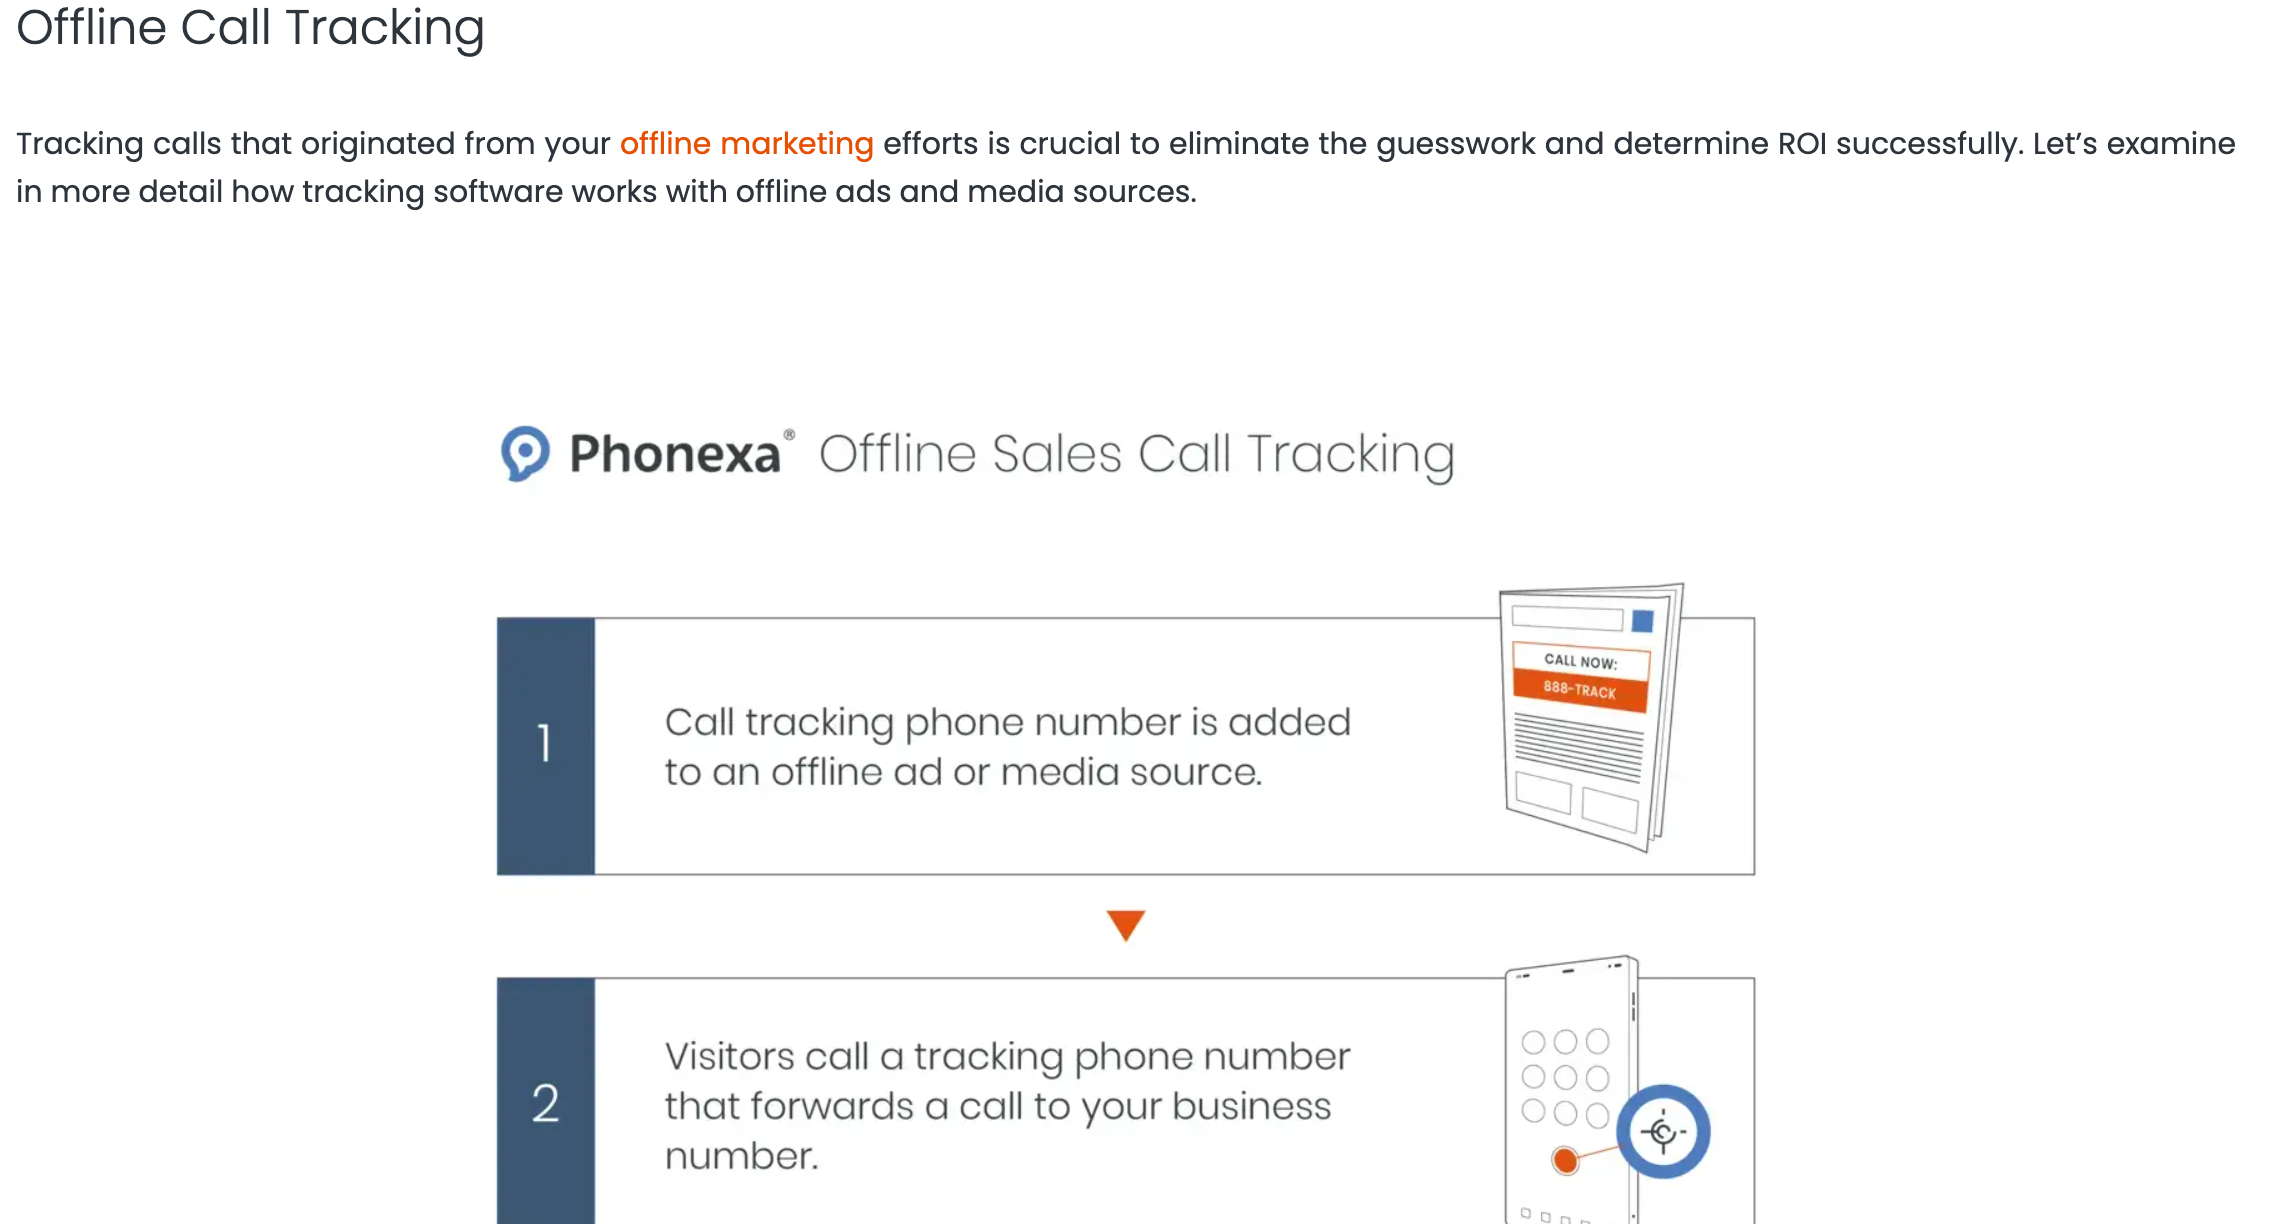 phonexa offline call tracking determines marketing campaign effectiveness